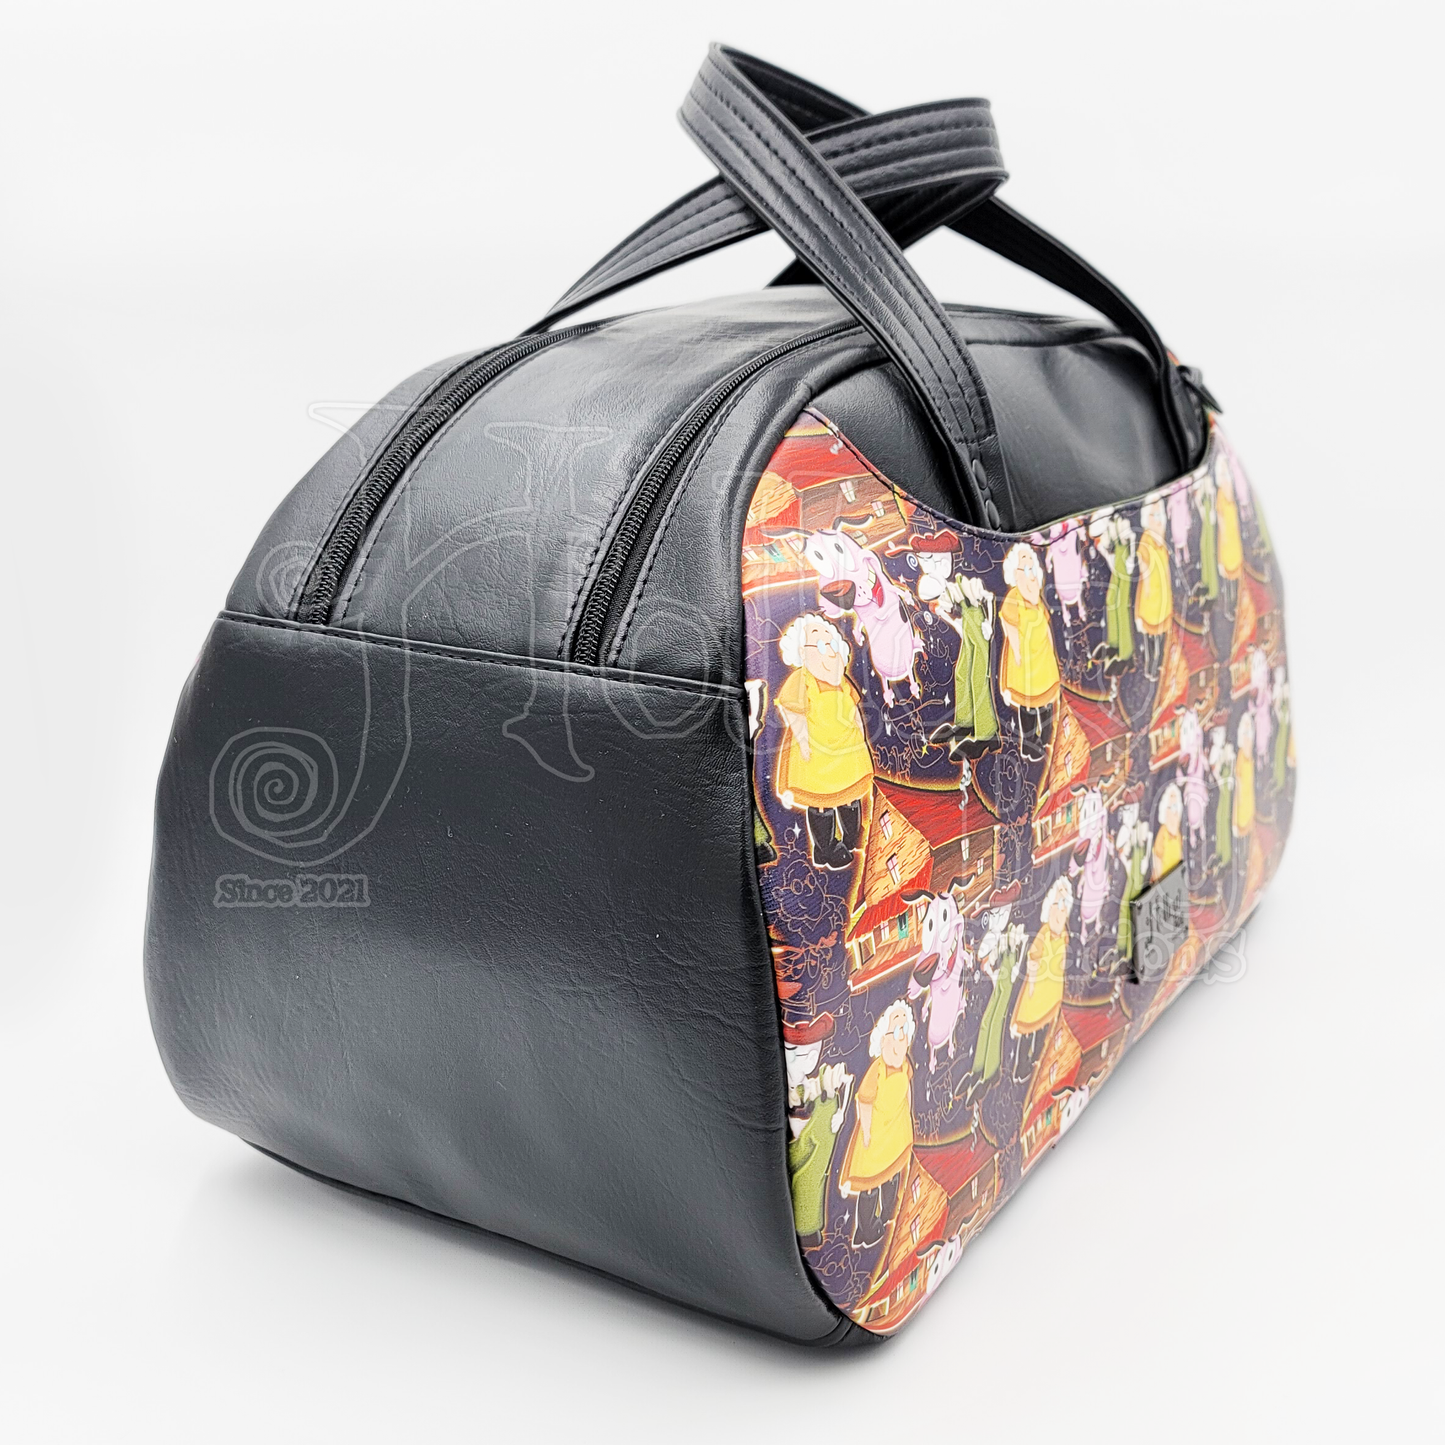 LG Travel Bag - Not-So-Brave Hound